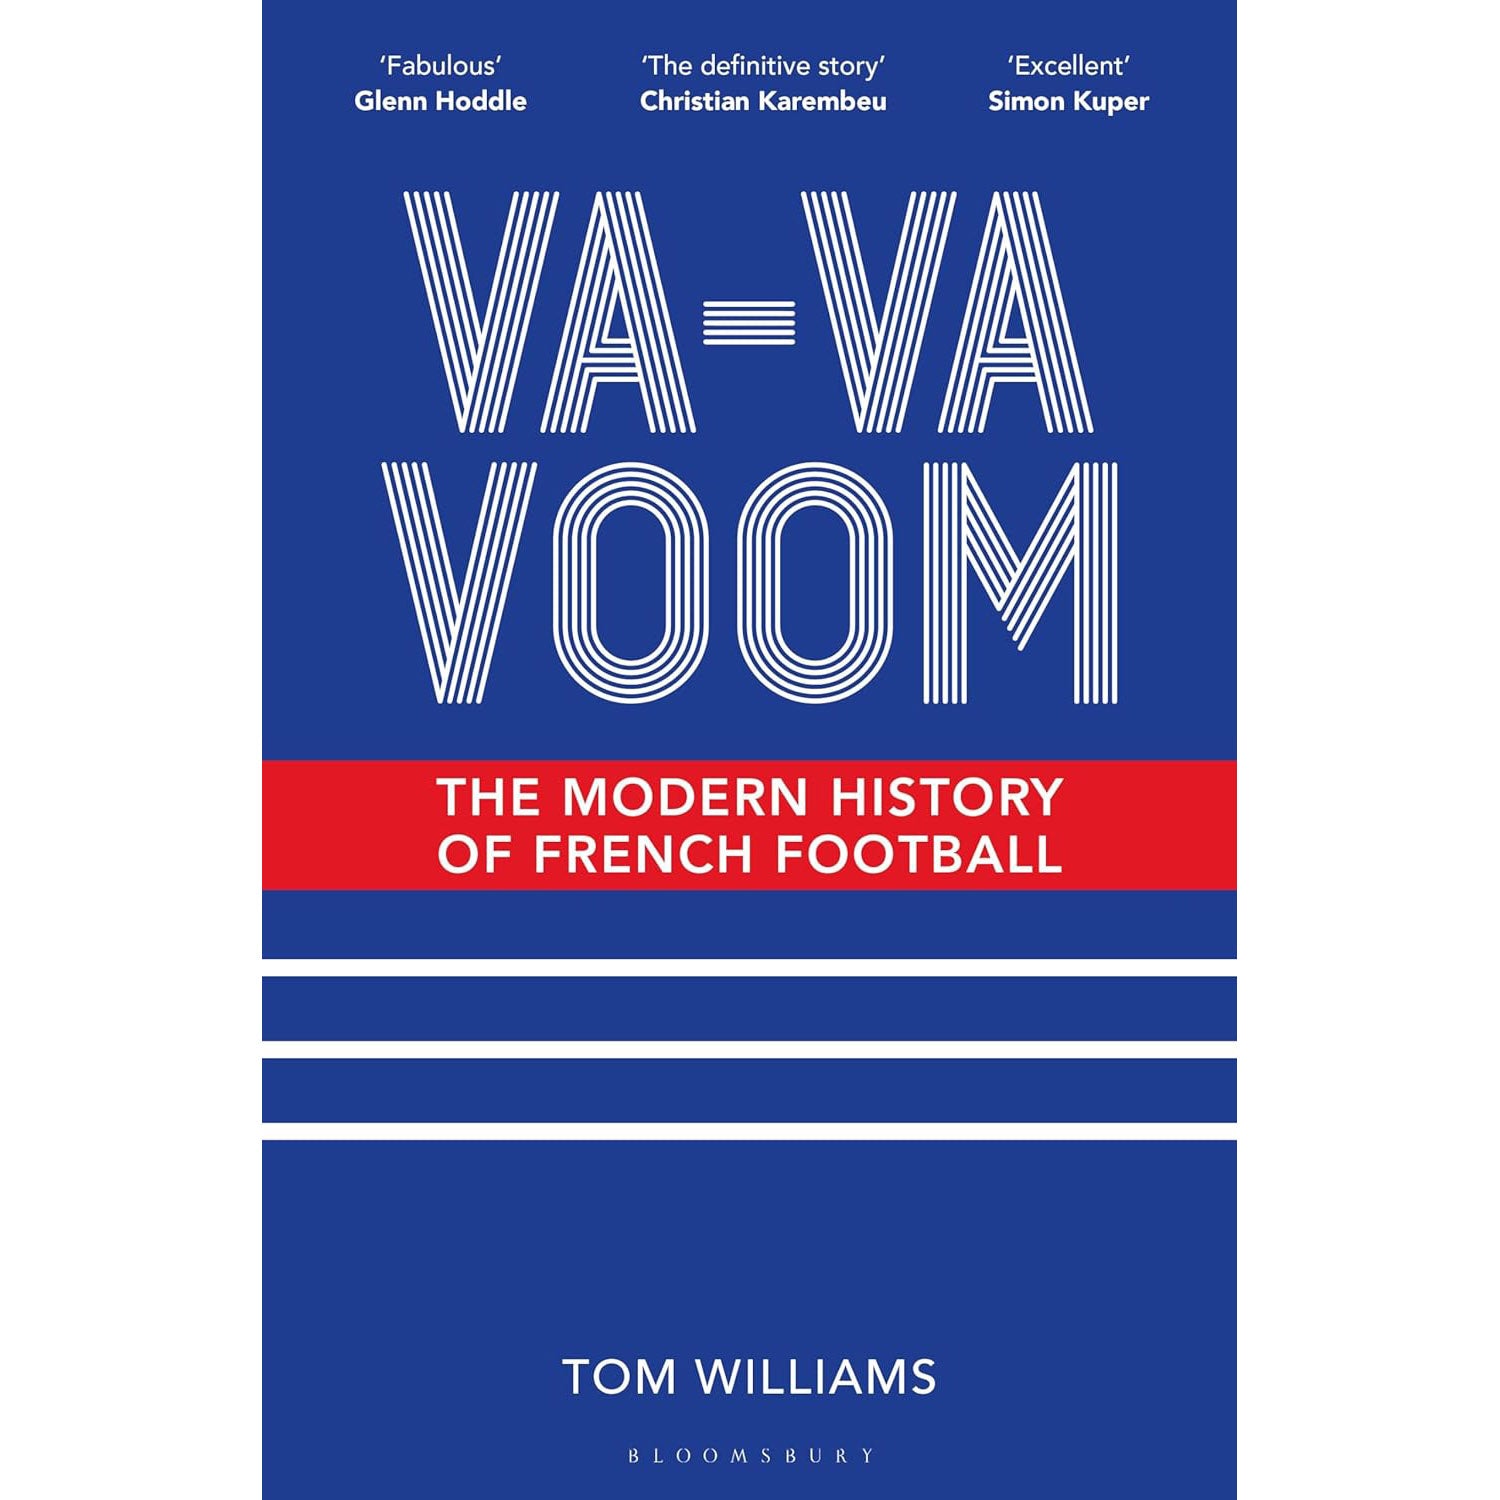 Va-Va Voom – The Modern History of French Football